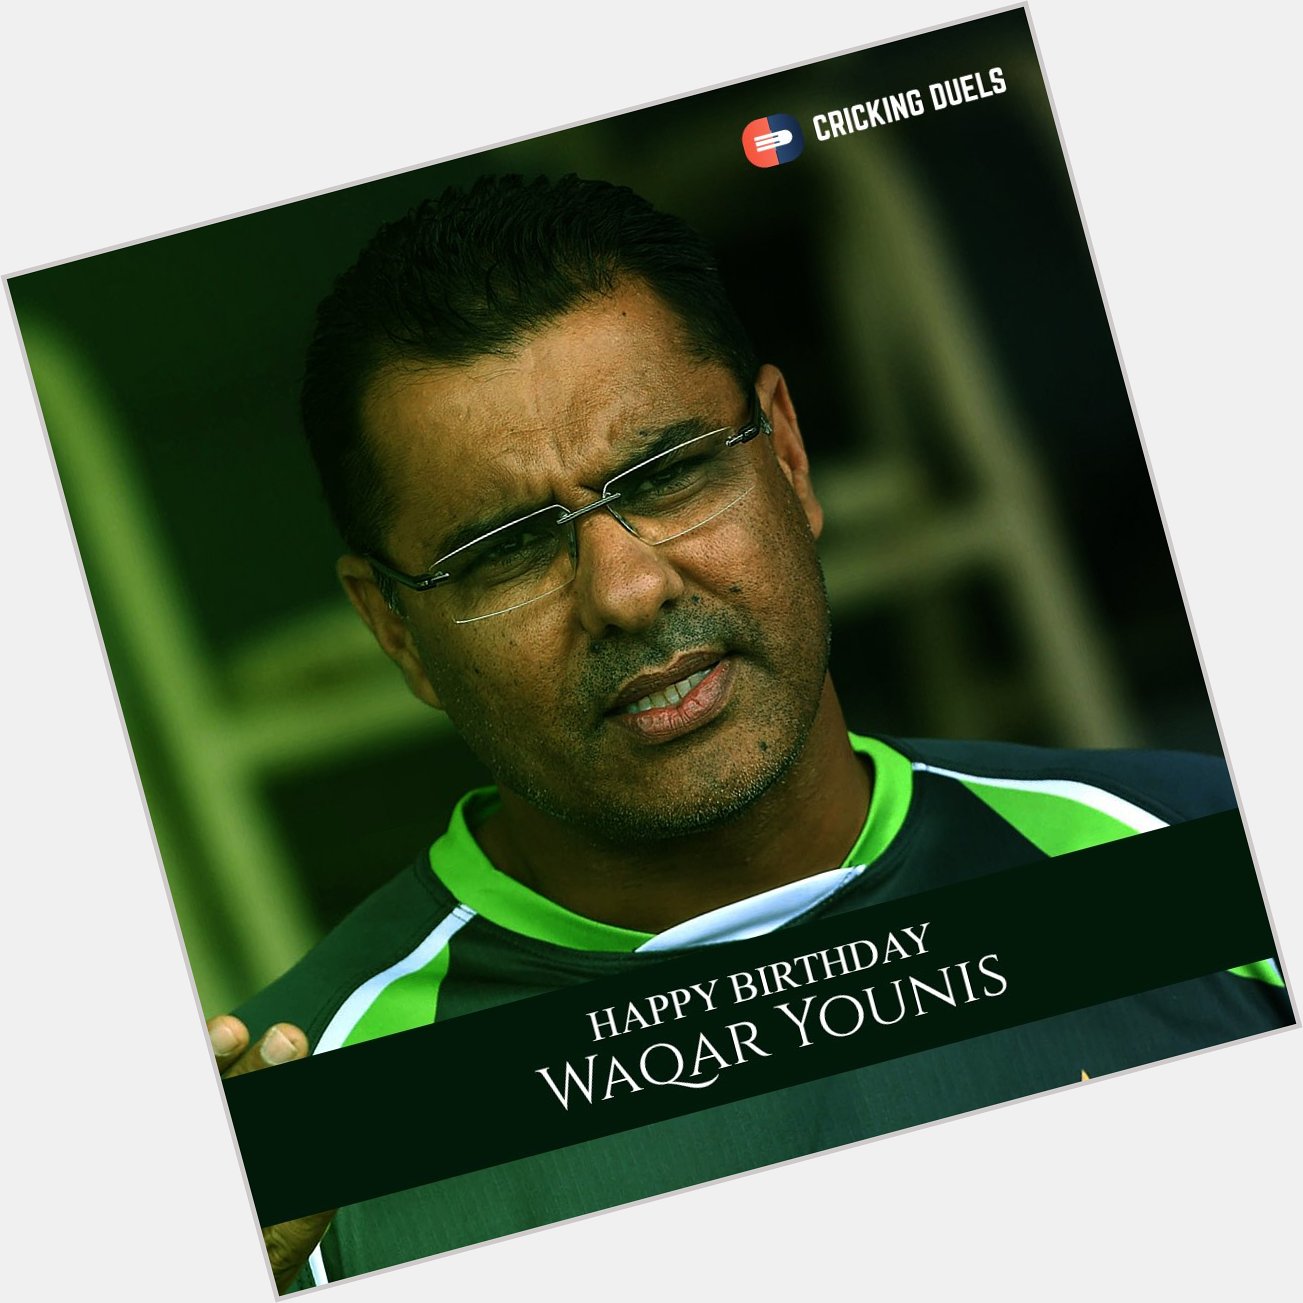 Happy birthday, Waqar Younis. 